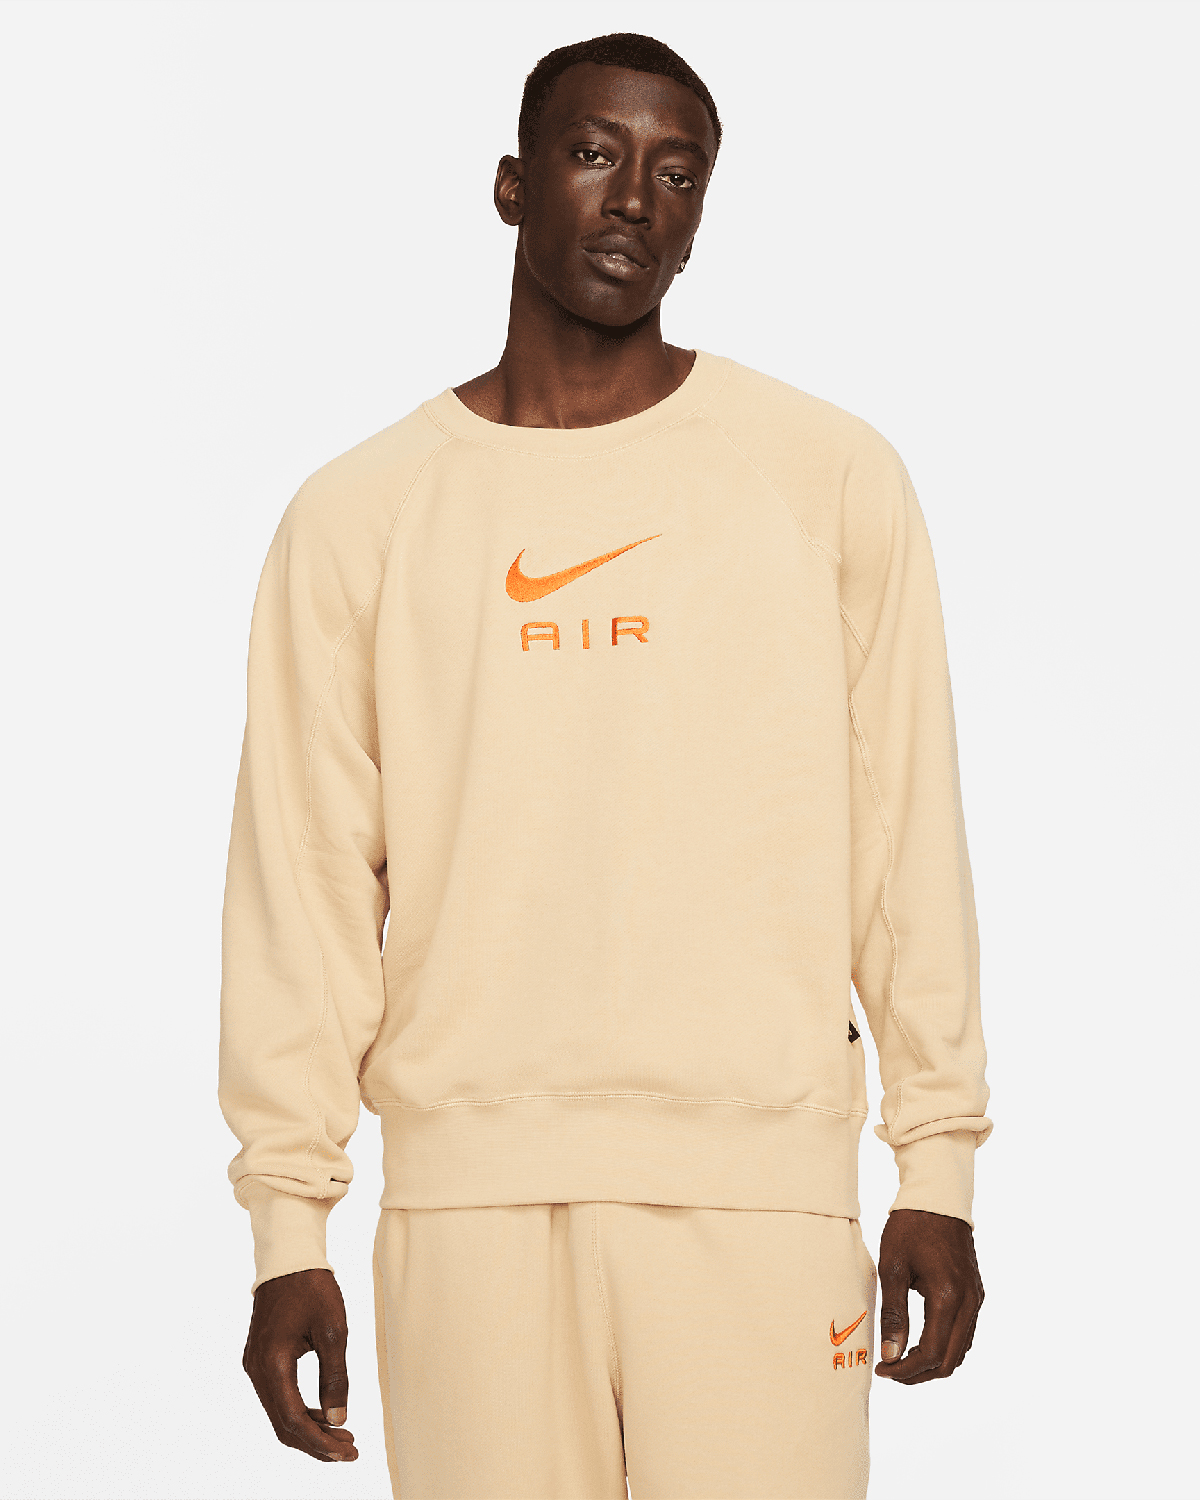 Nike-Sportswear-Air-Sweatshirt-Sesame-Safety-Orange